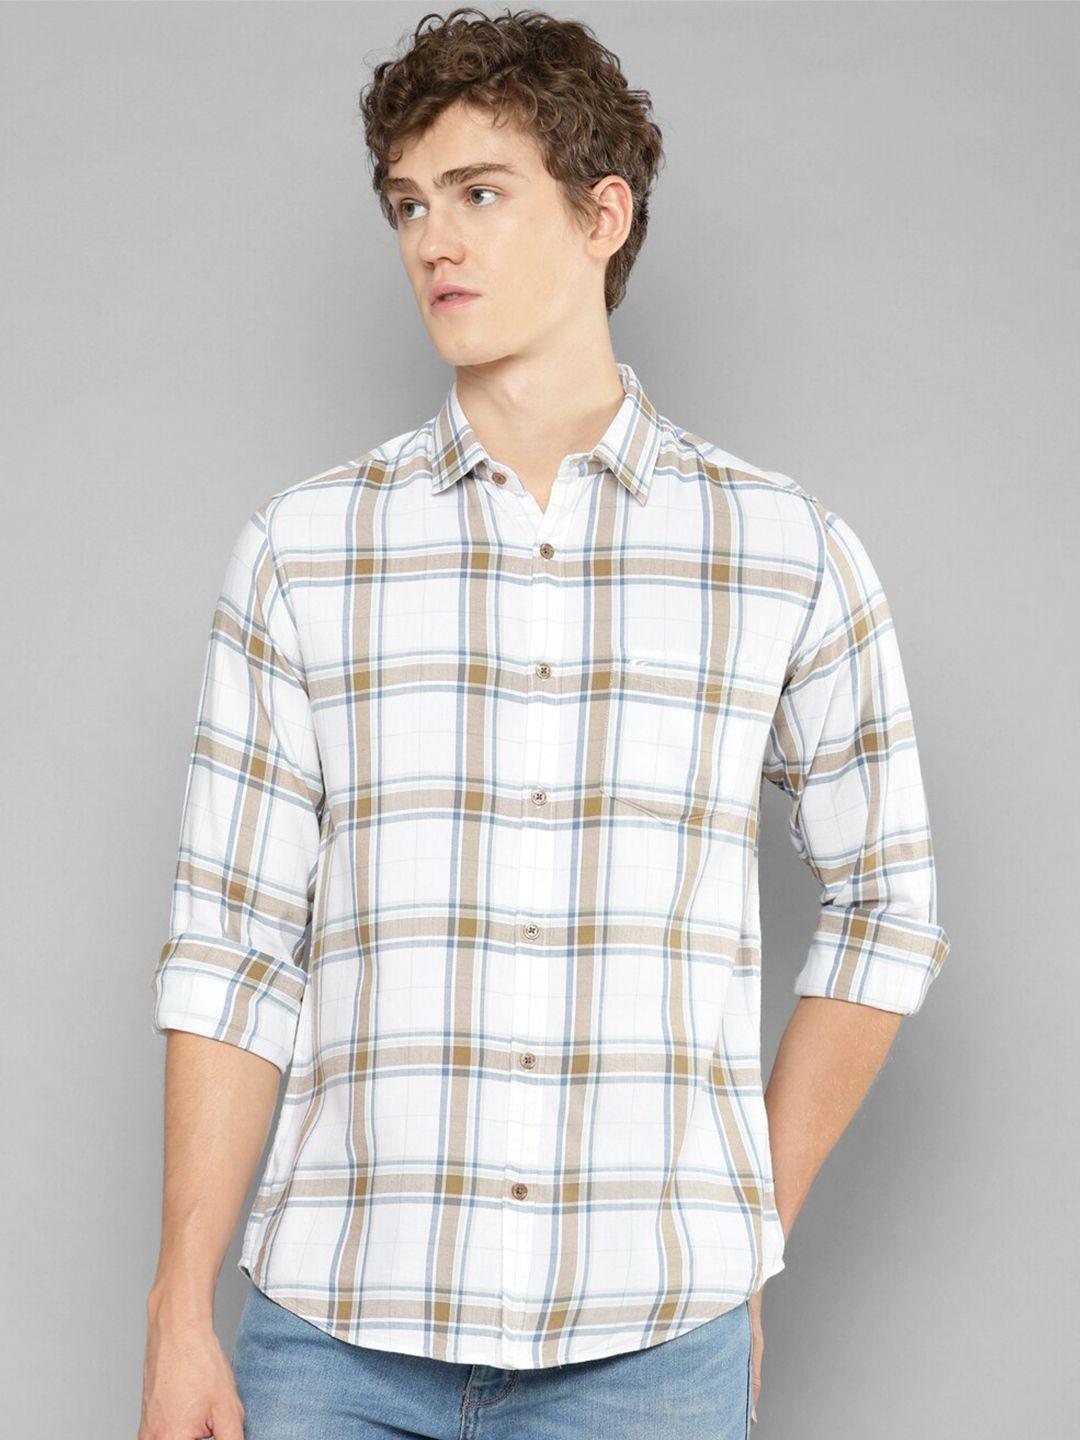 allen-cooper-slim-fit-tartan-checked-opaque-cotton-casual-shirt